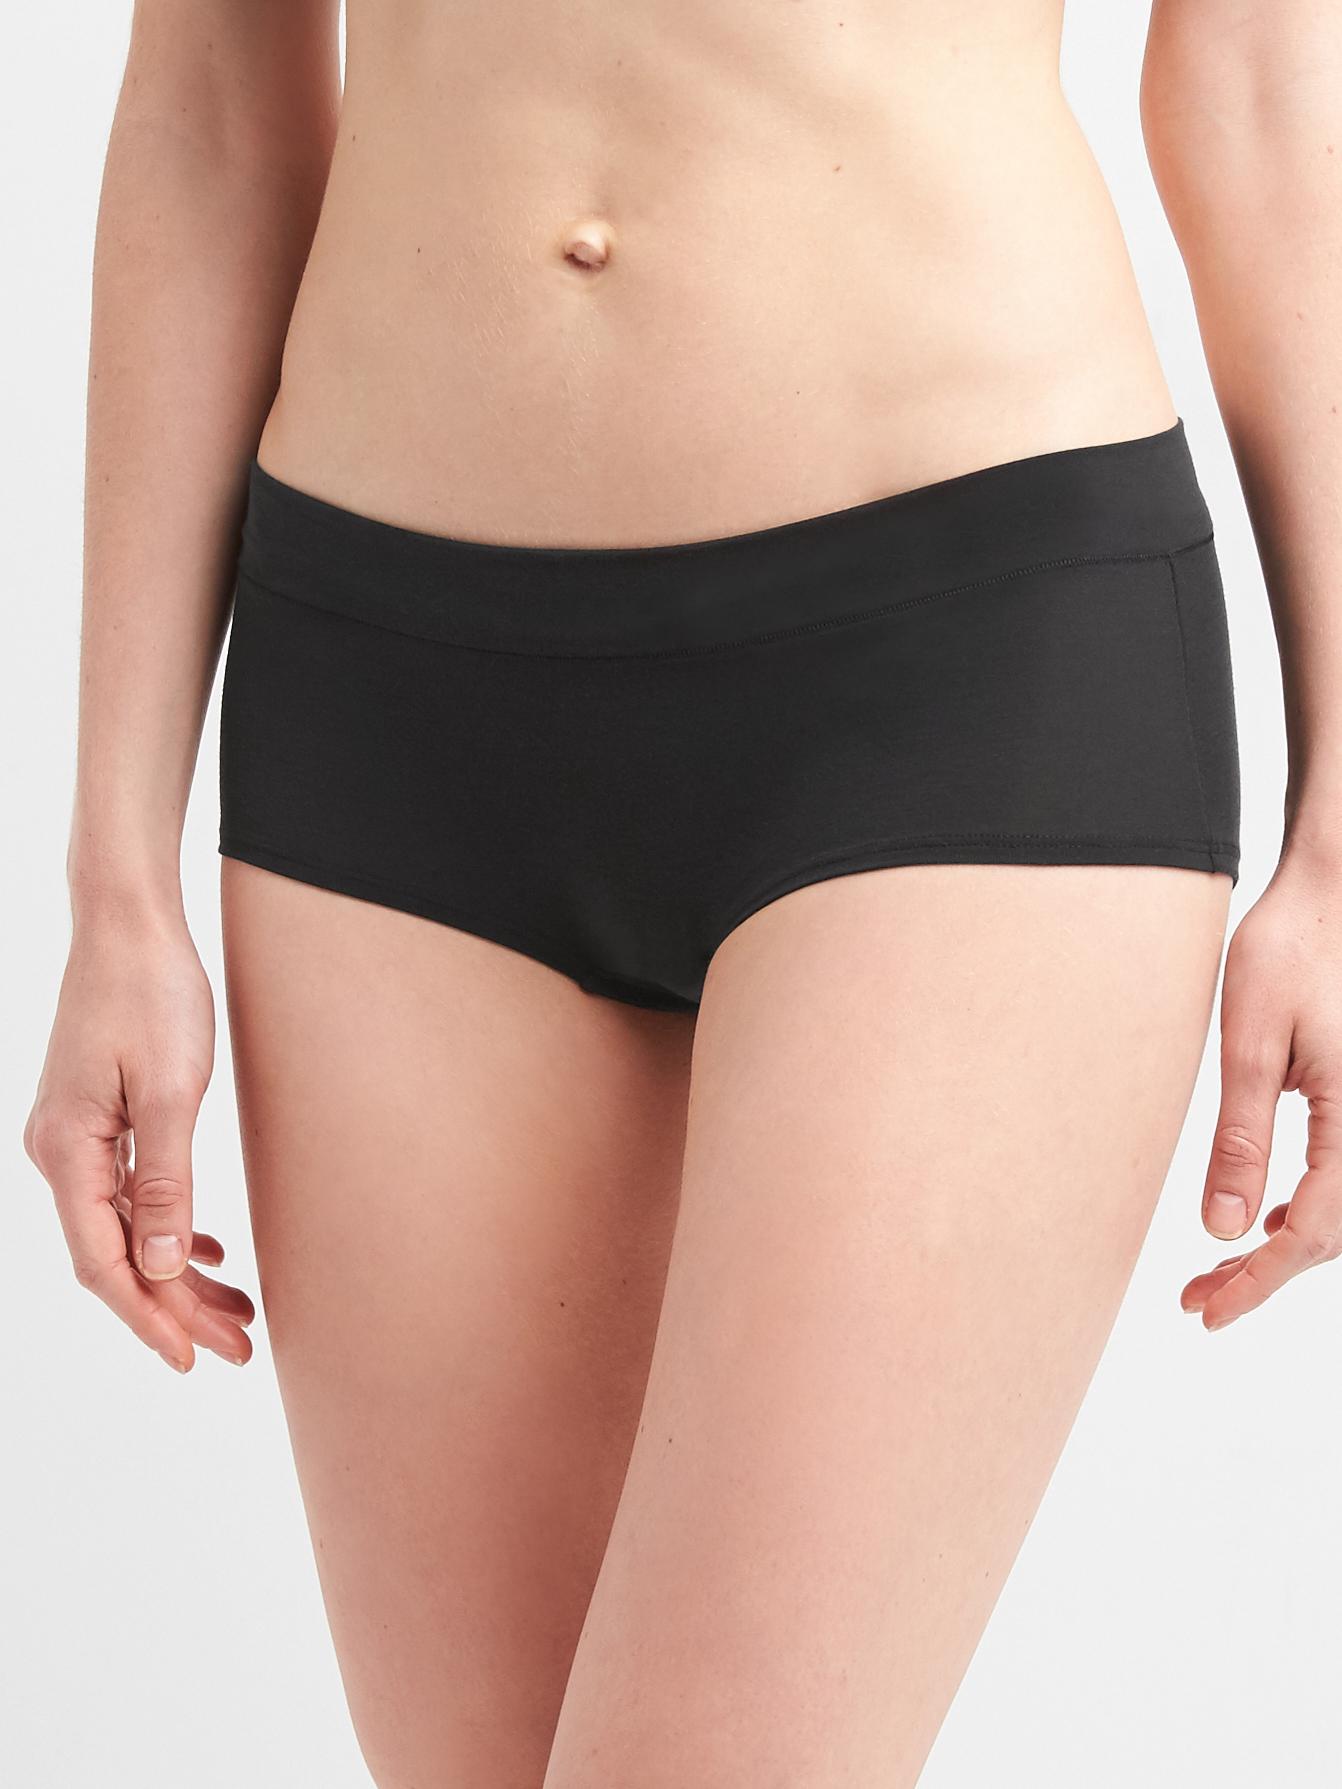 New Gap 5-Pack Cotton Spandex Breeze Thong Underwear Panties